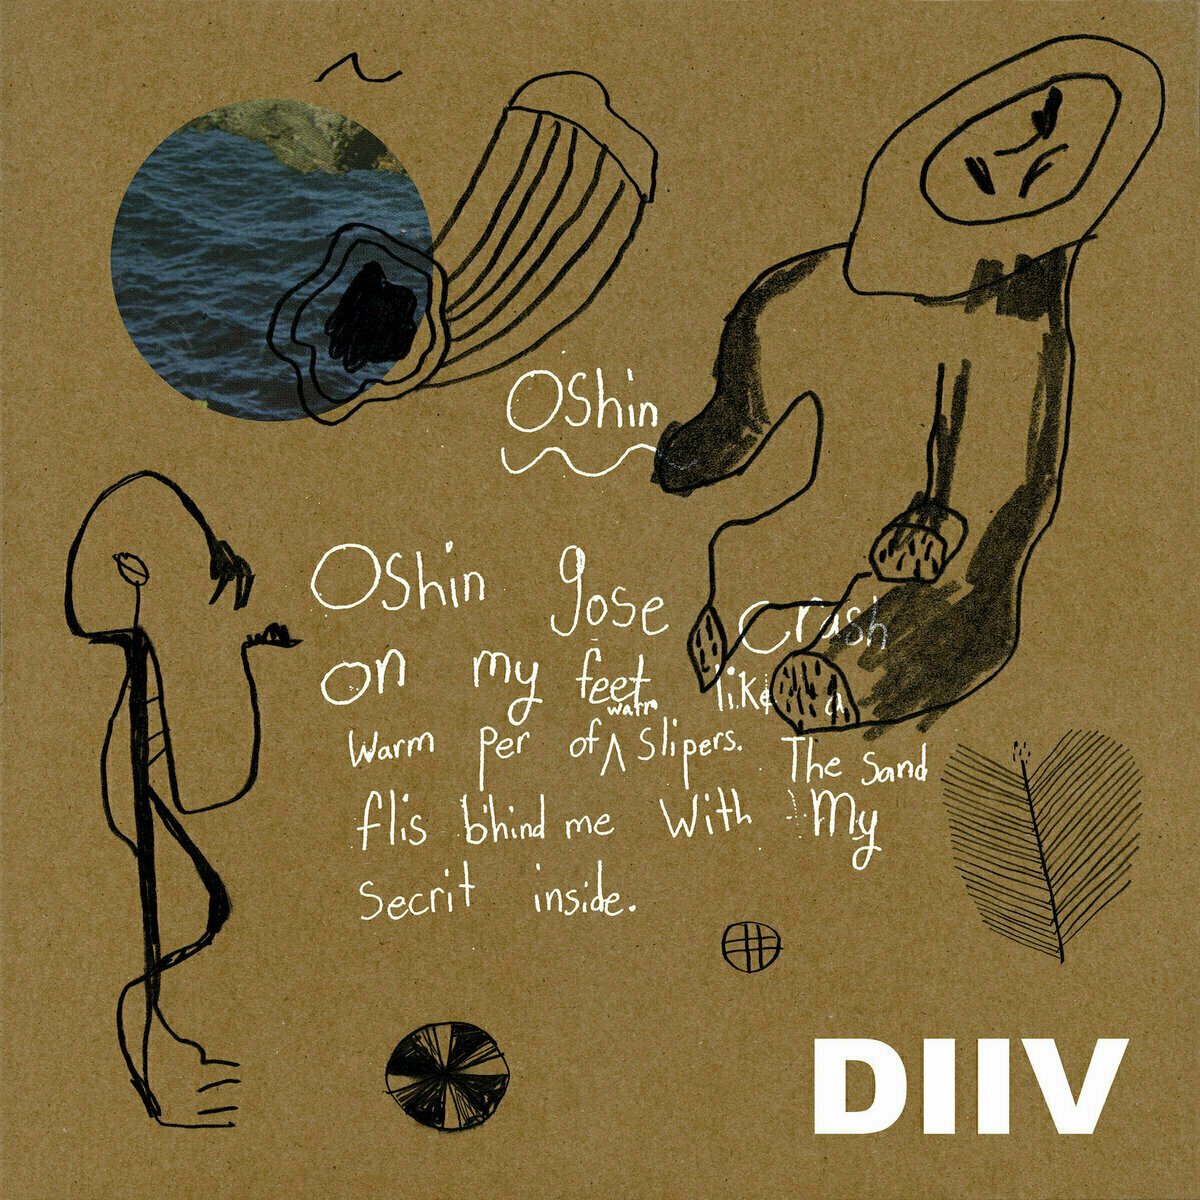 Disque vinyle Diiv - Oshin - 10th Anniversary (Reissue) (Blue Vinyl) (2 LP)